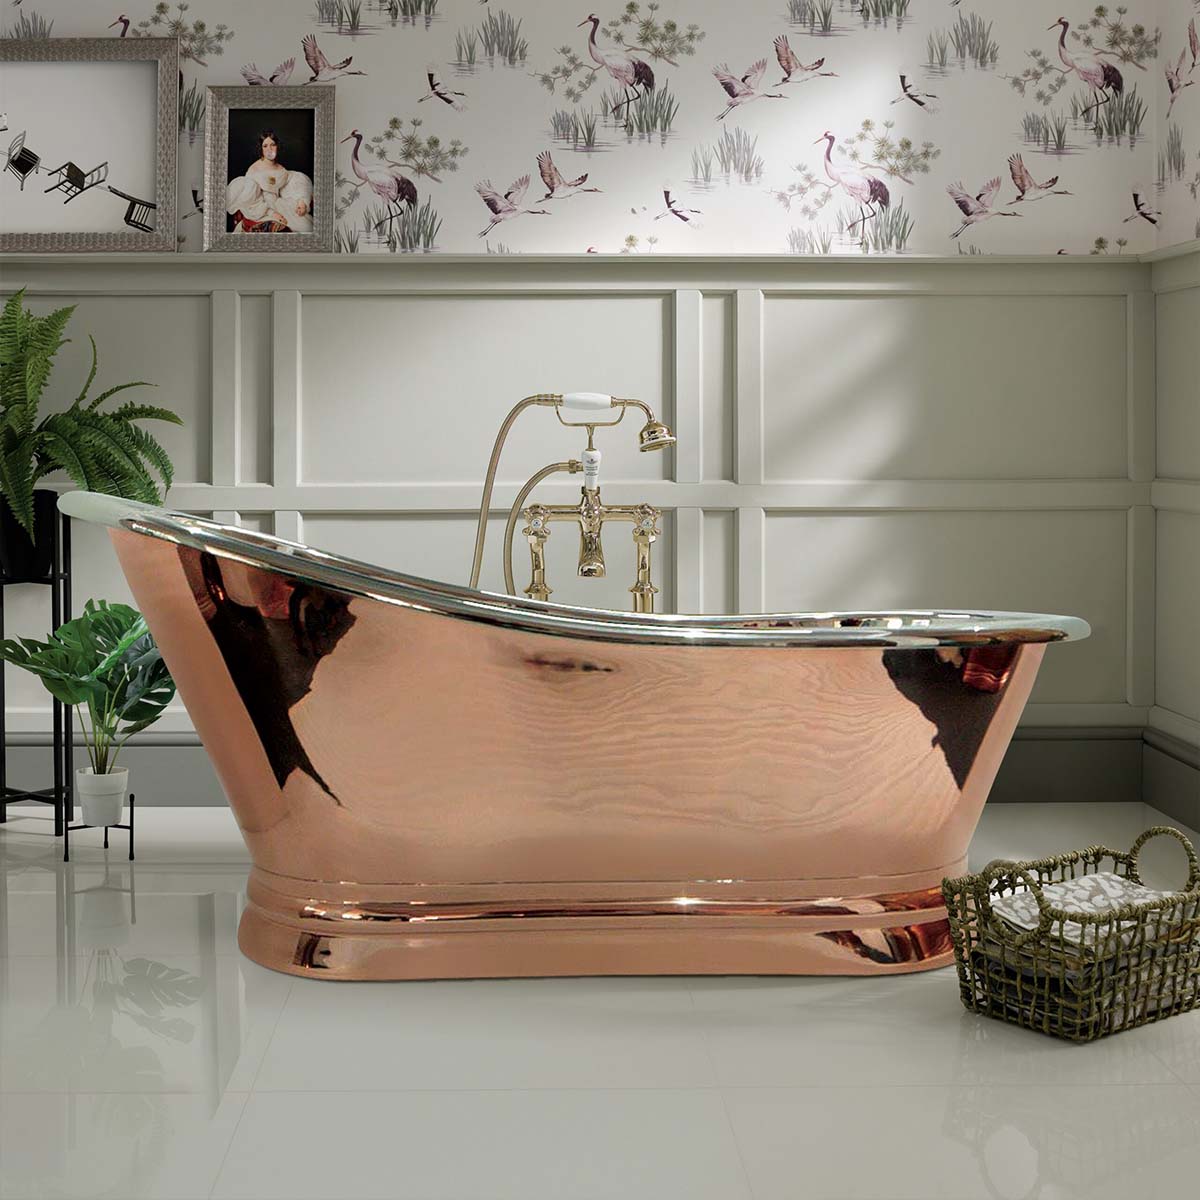 bcdesigns copper nickel slipper bath lifestyle